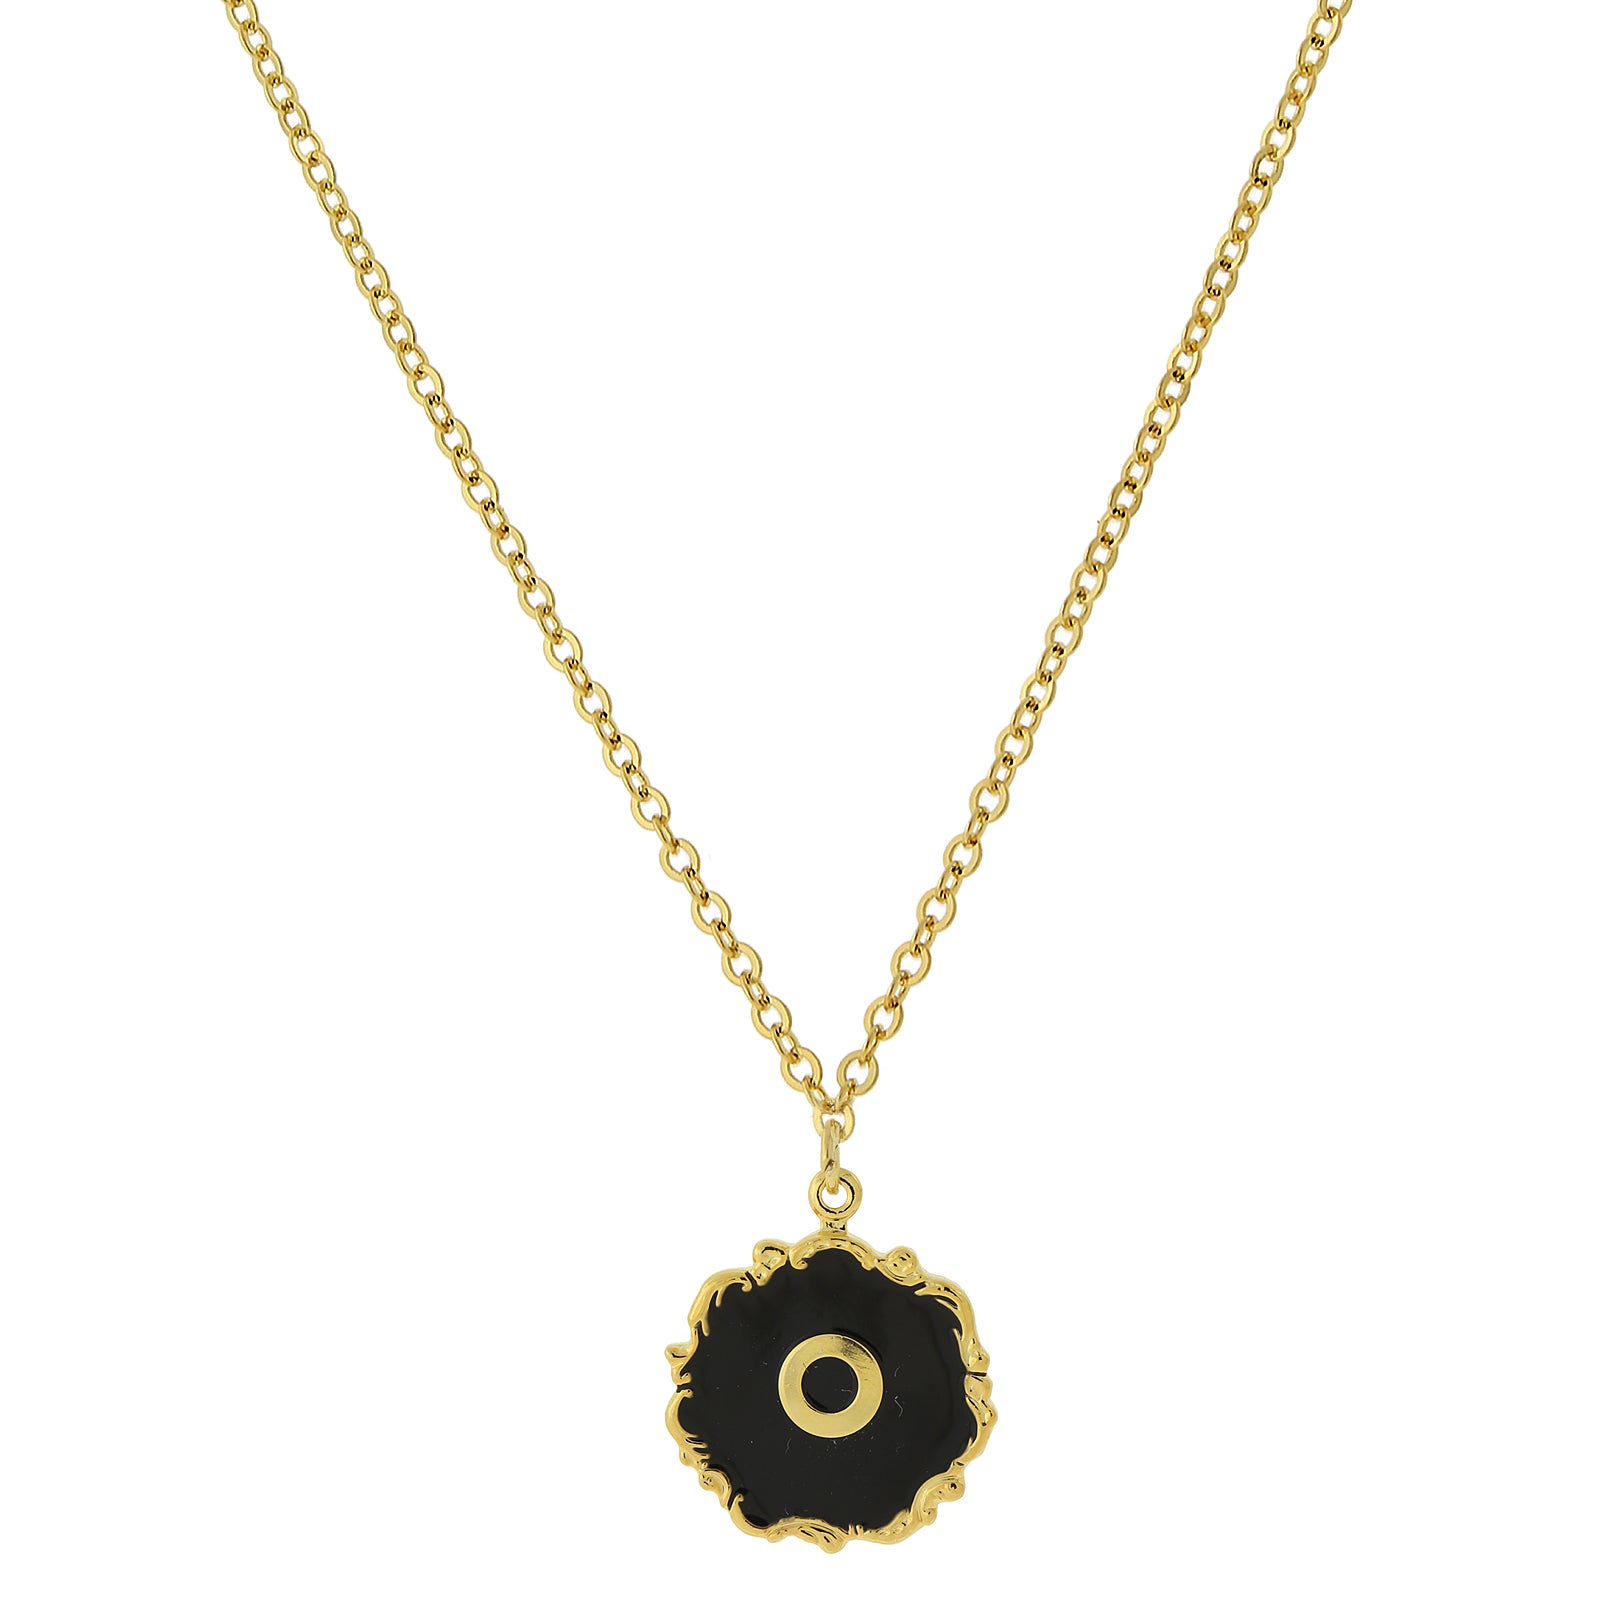 1928 Jewelry Sunburst Black Enamel Initial Pendant Necklace 16